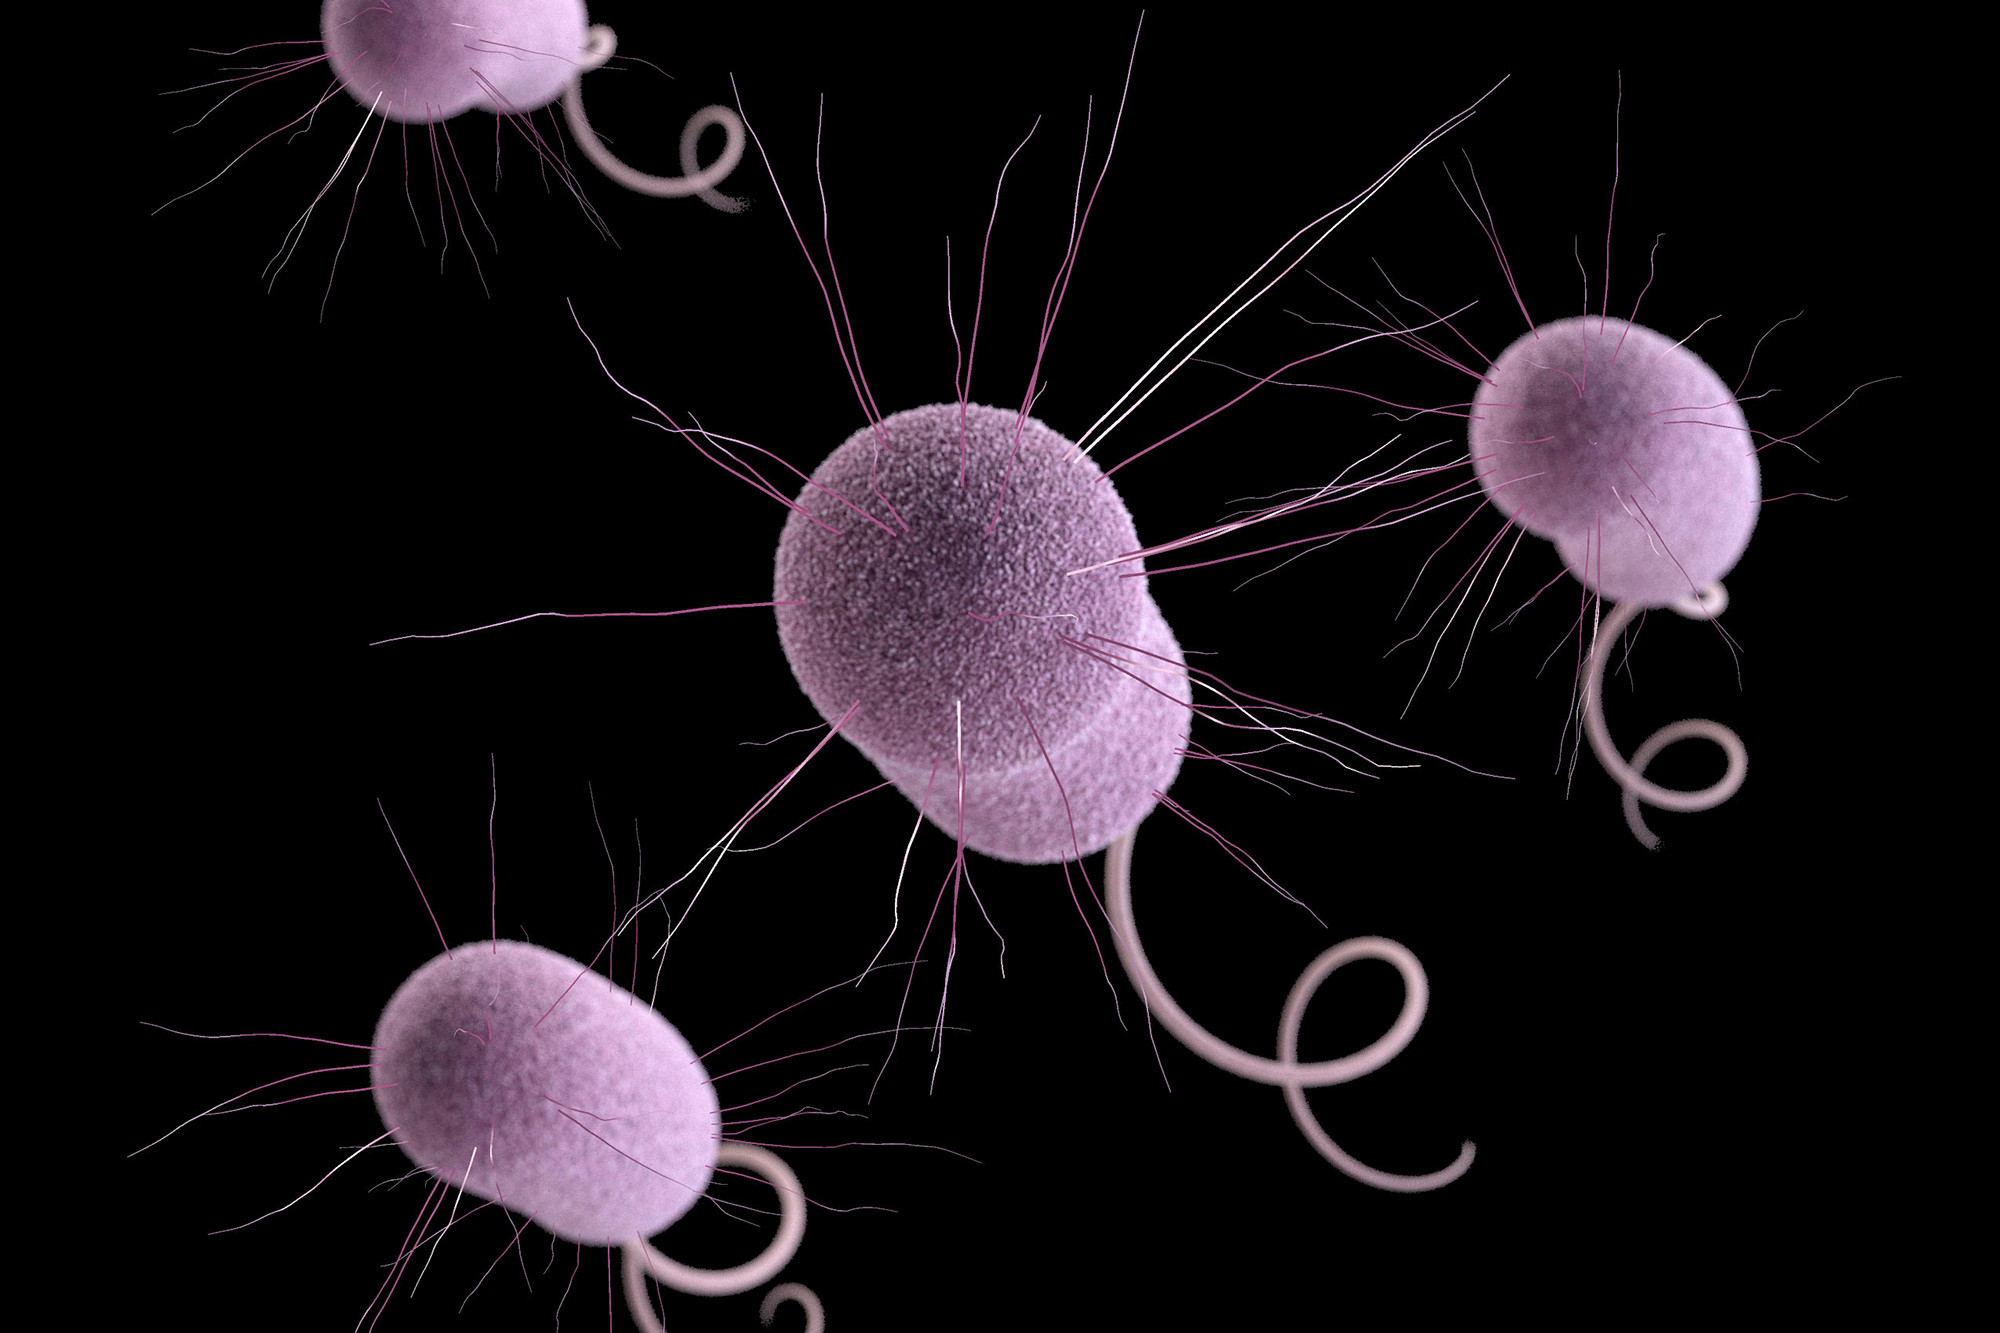 Drug-resistant 'nightmare bacteria' pose growing threat: CDC